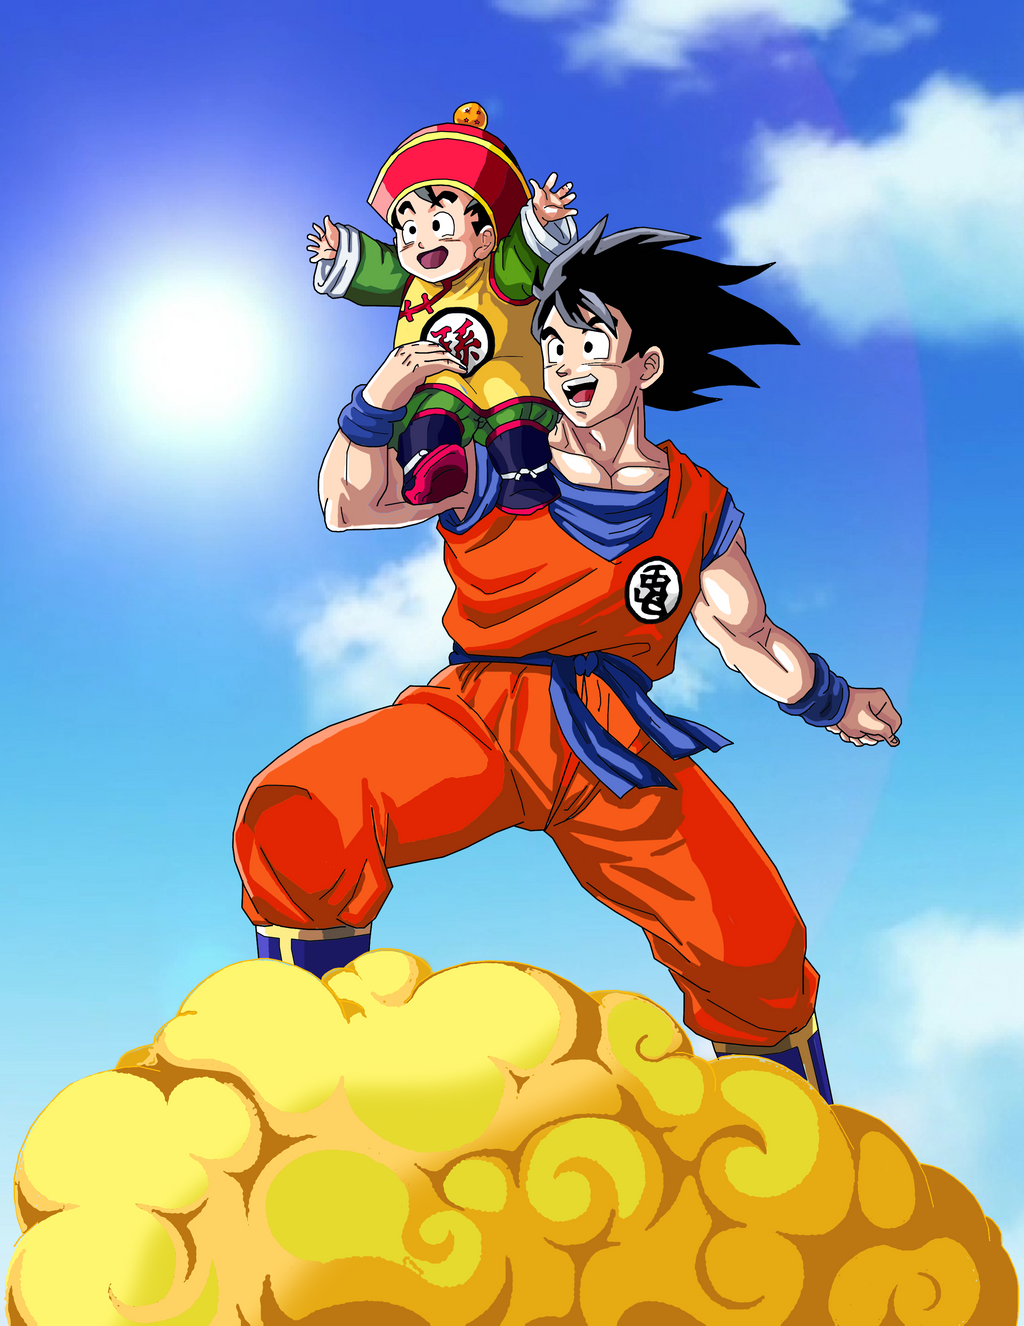 Goku and Gohan Wallpaper Phone Version by BrusselTheSaiyan on DeviantArt